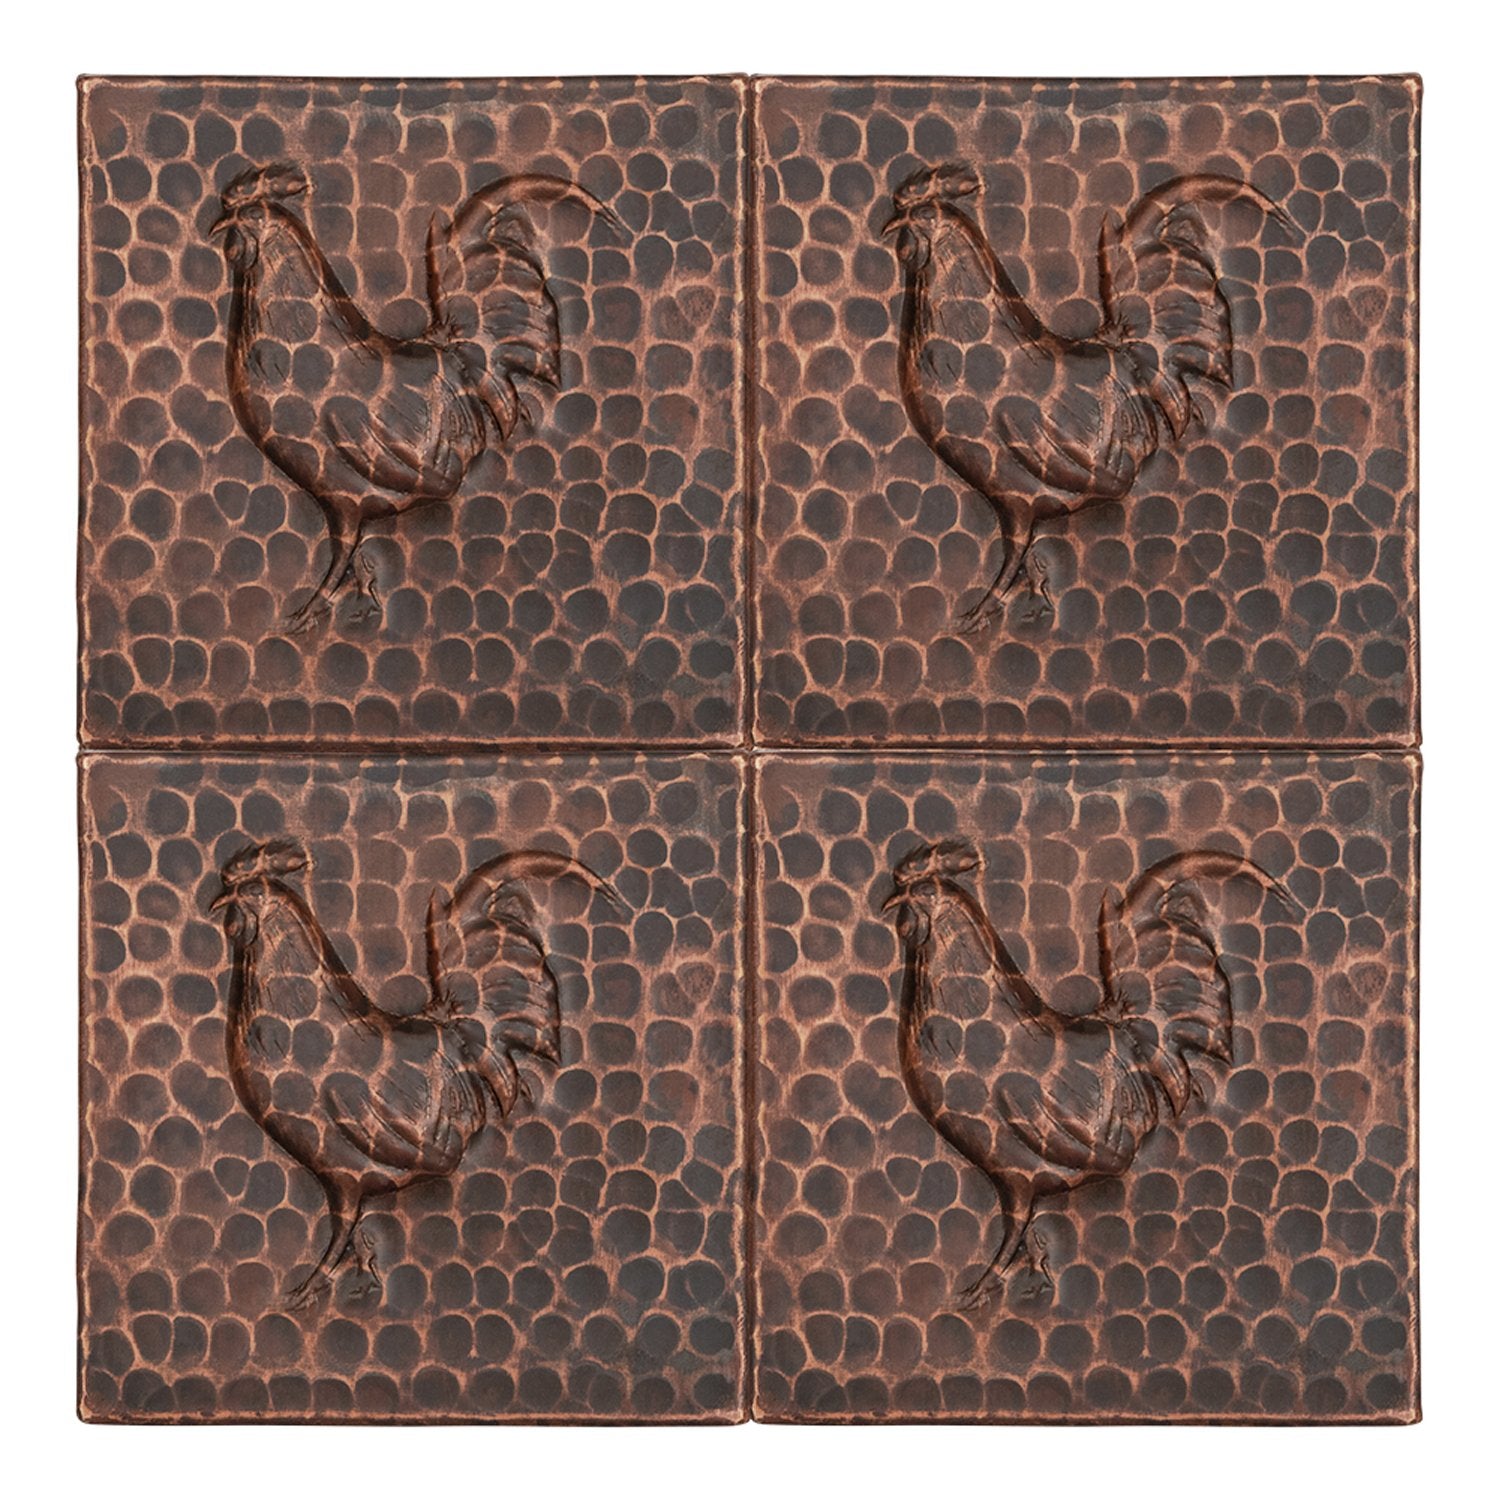 4" x 4" Hammered Copper Rooster Tile, pack of 8 Tiles